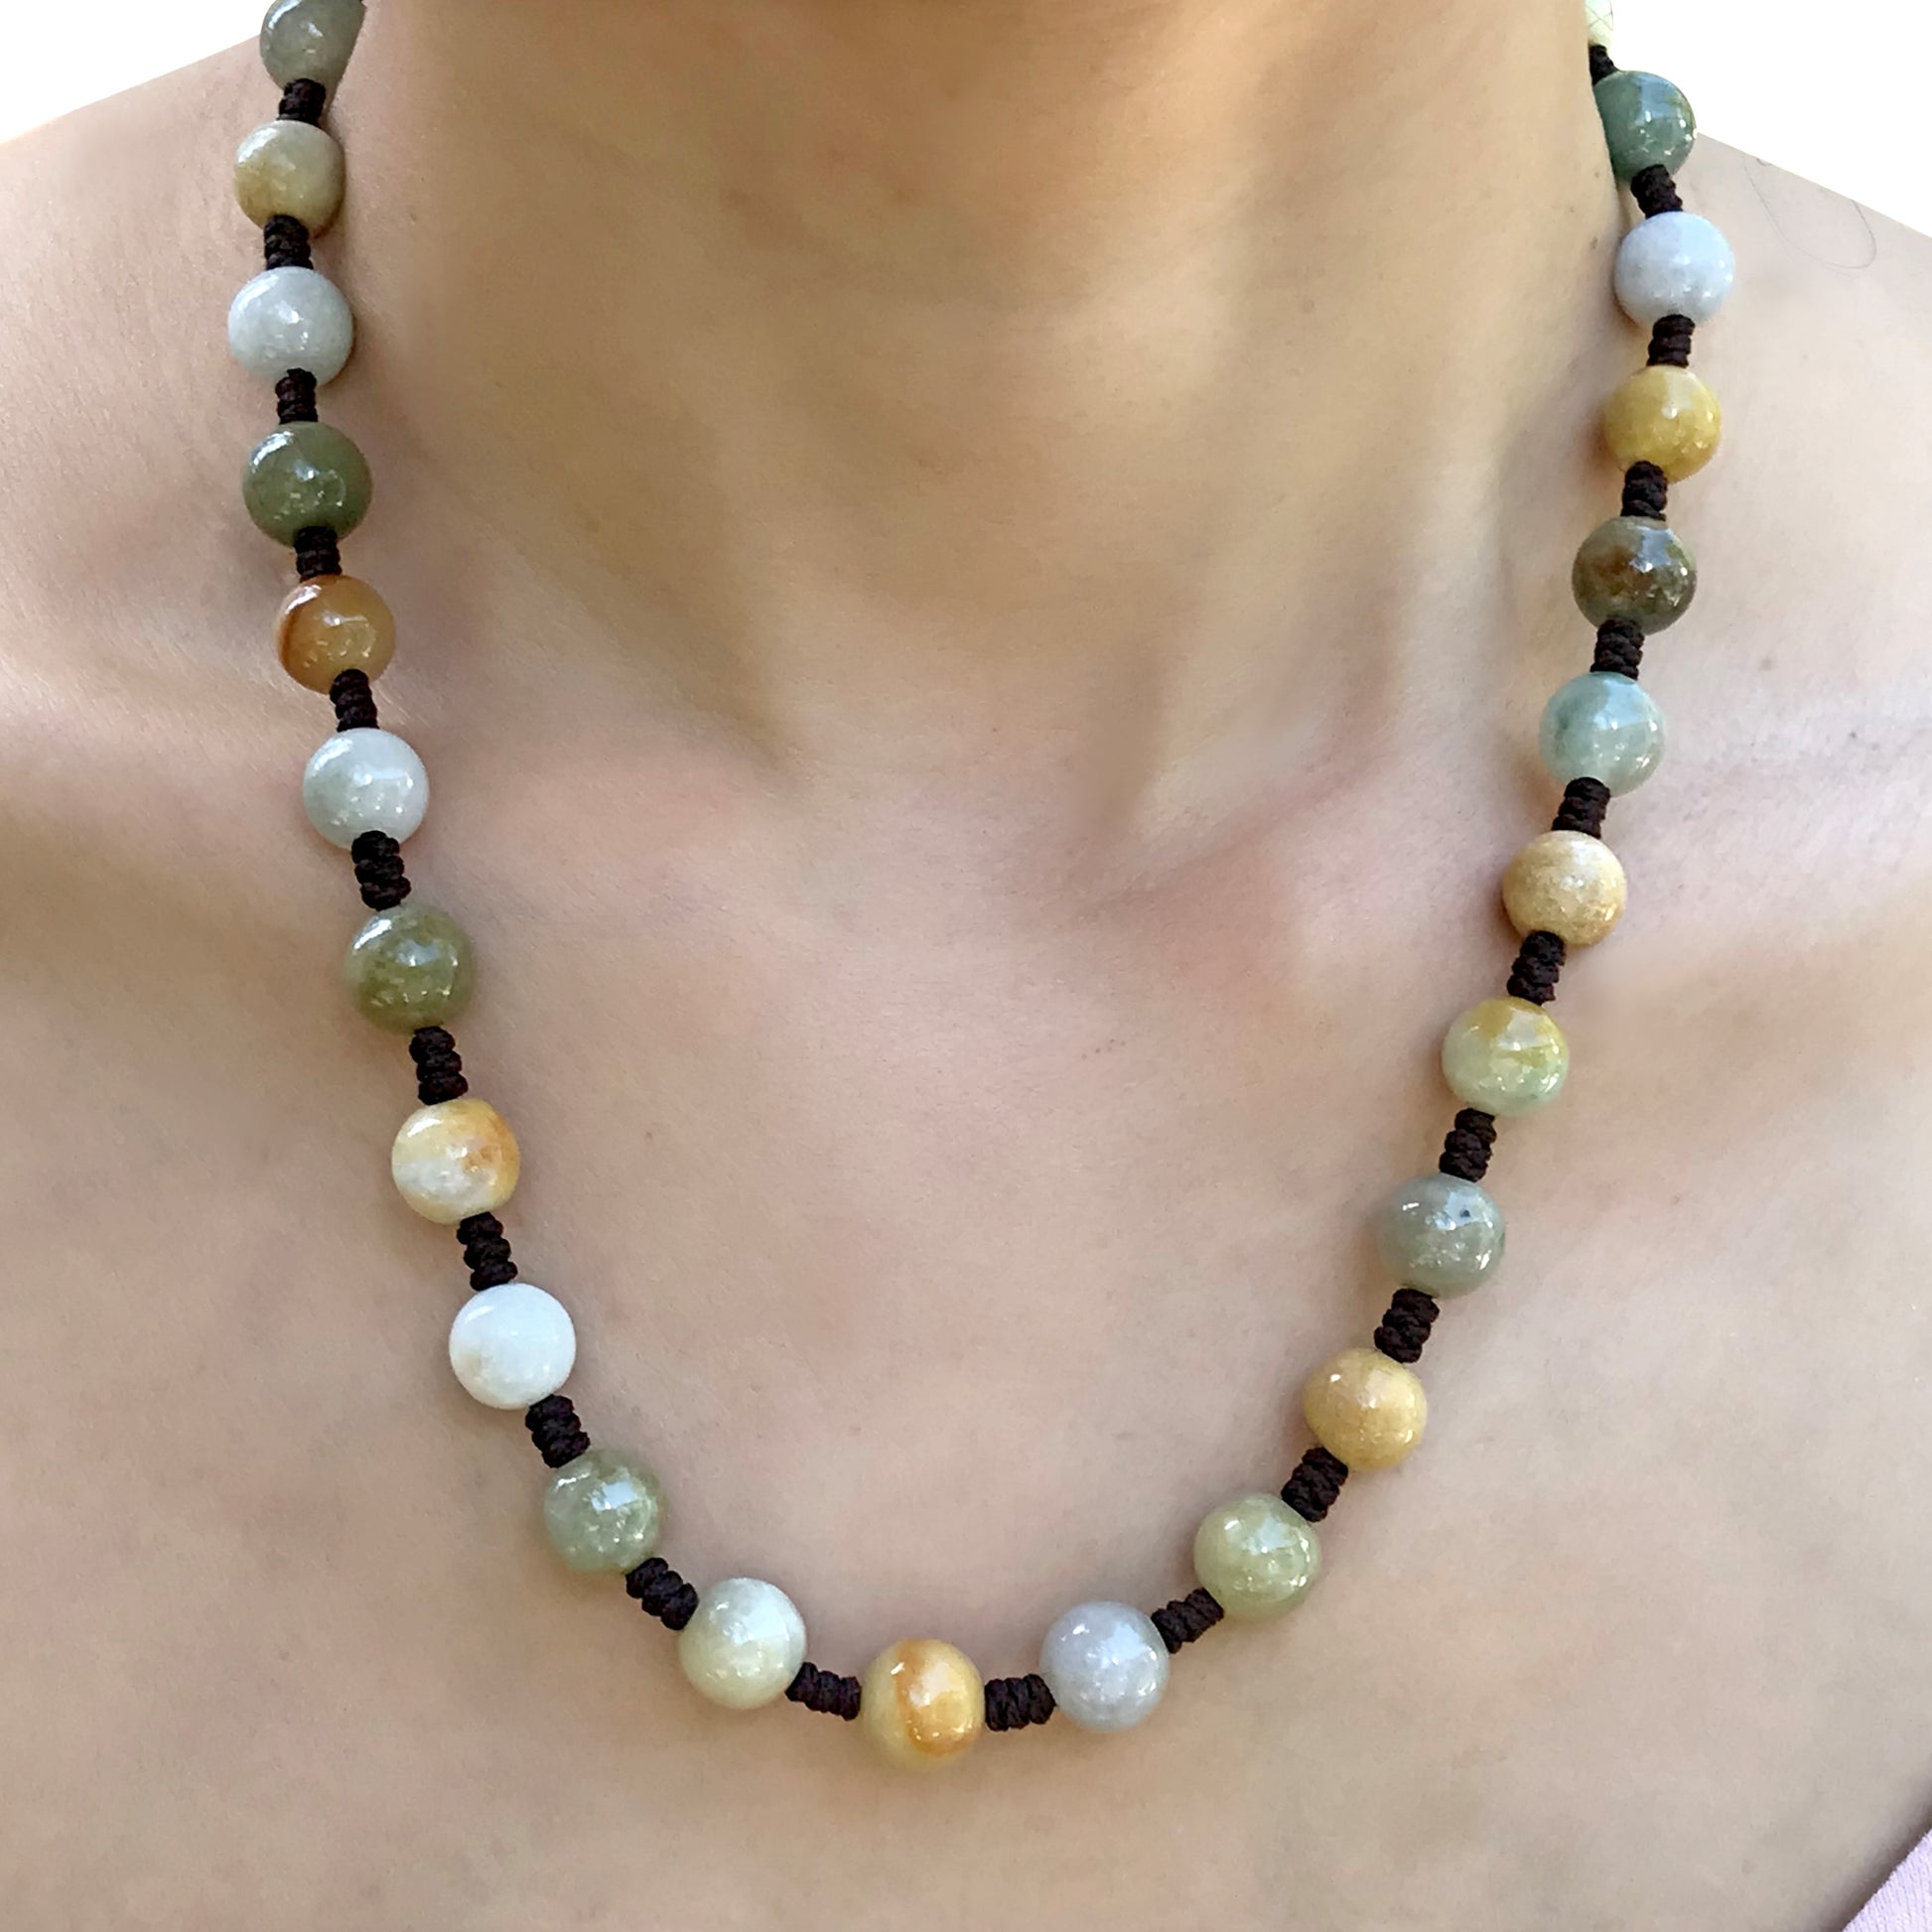 Beautiful Buddha Prayer Beads Handmade Jade Necklace Pendant with Brown Cord